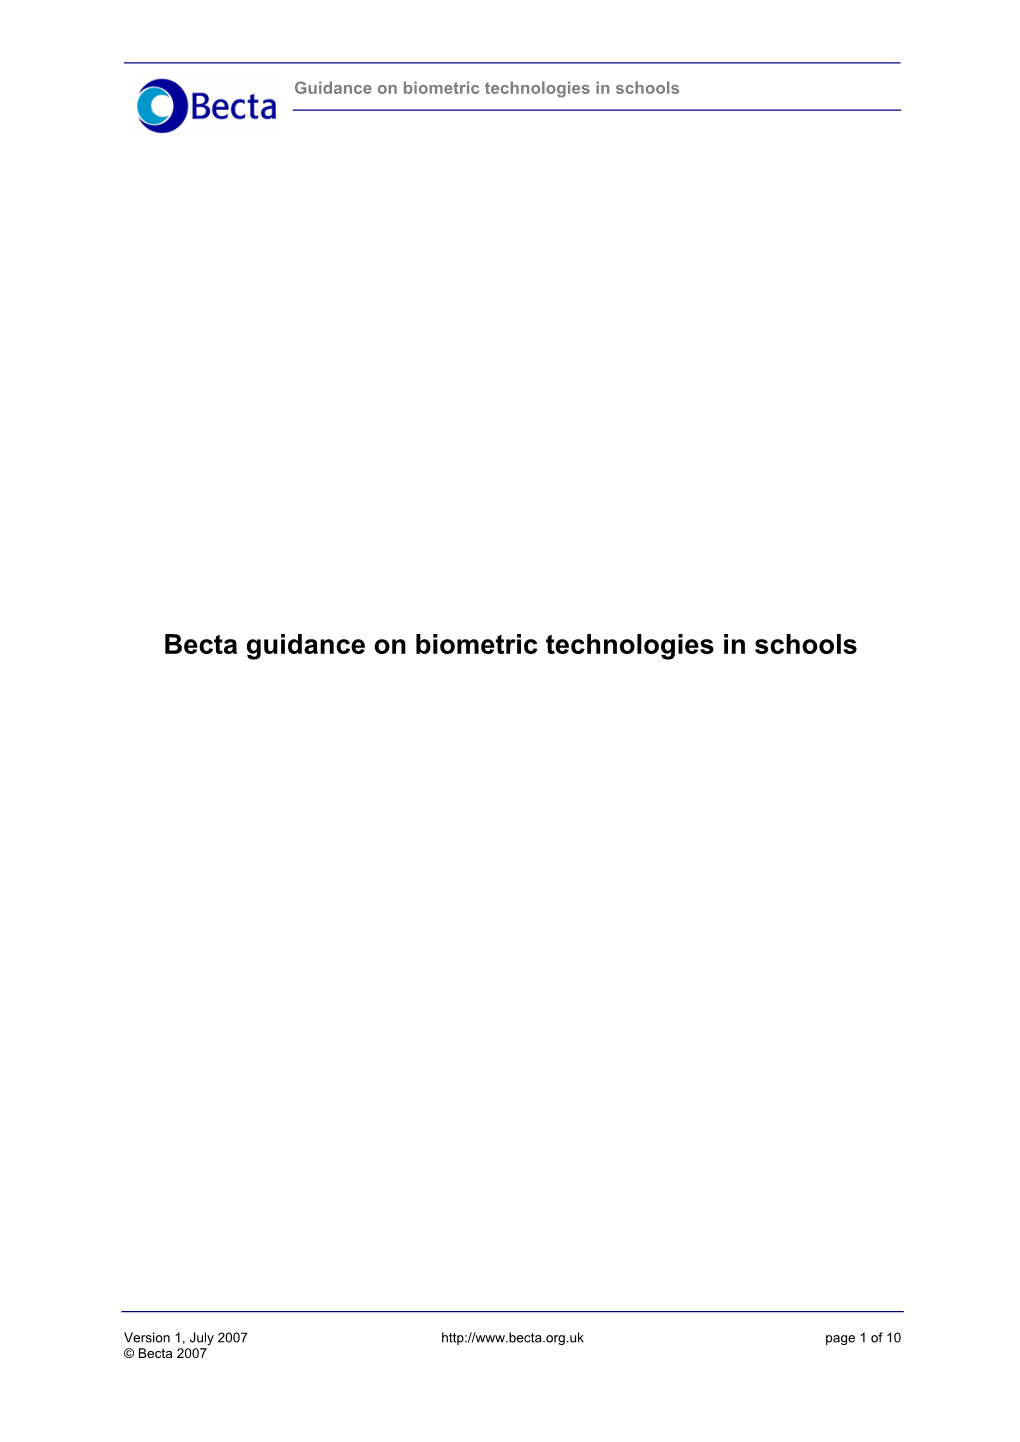 Guidance on Biometric Technologies in Schools